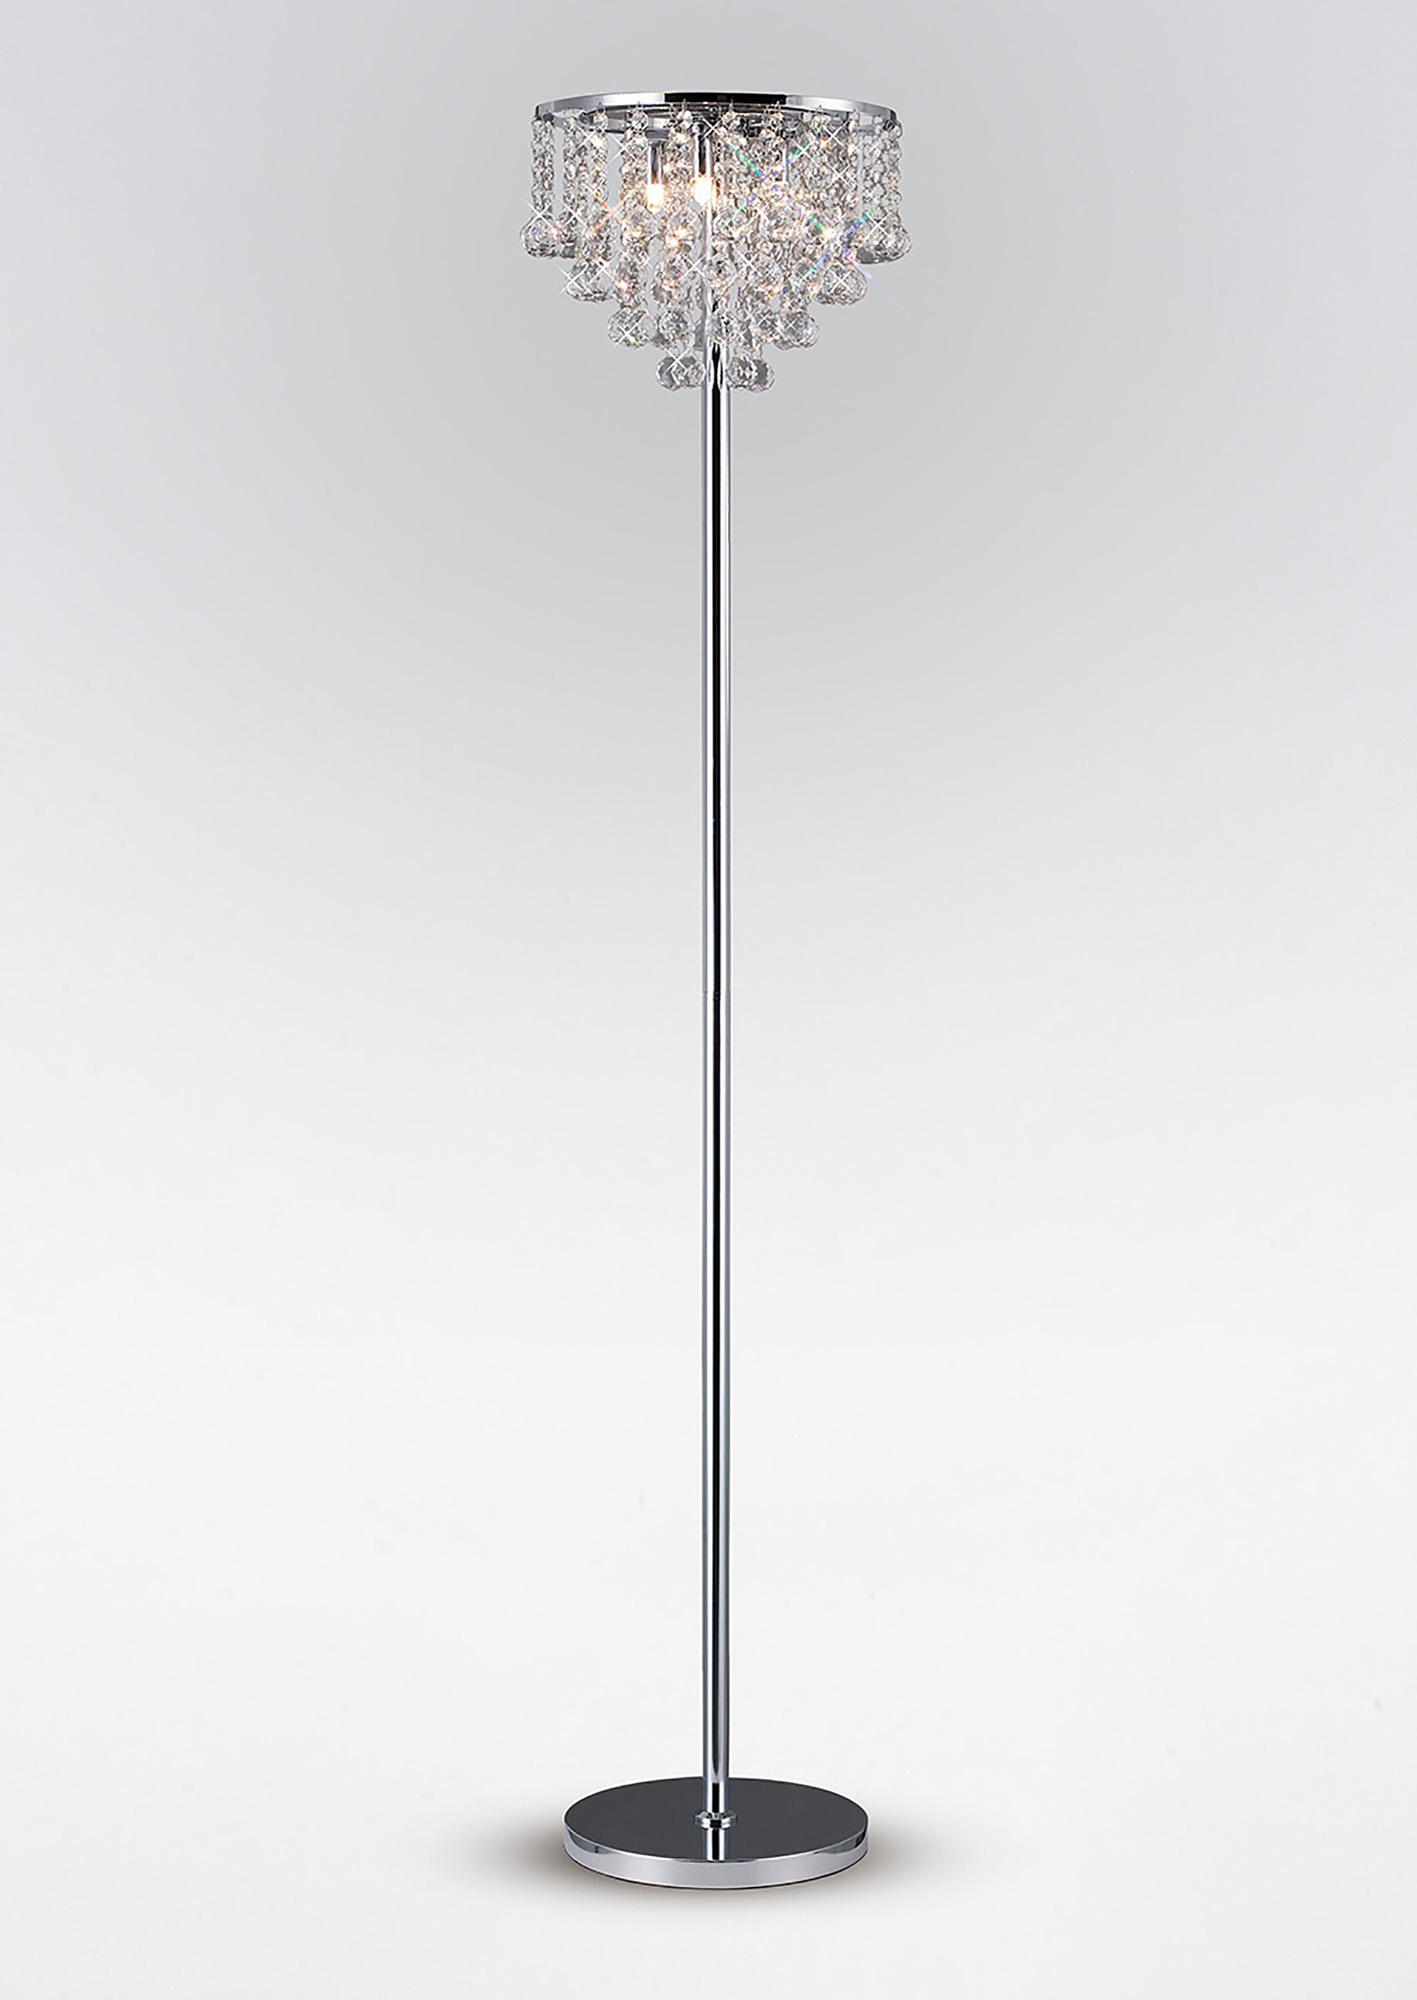 IL30029  Atla Crystal 155cm Floor Lamp 4 Light Polished Chrome